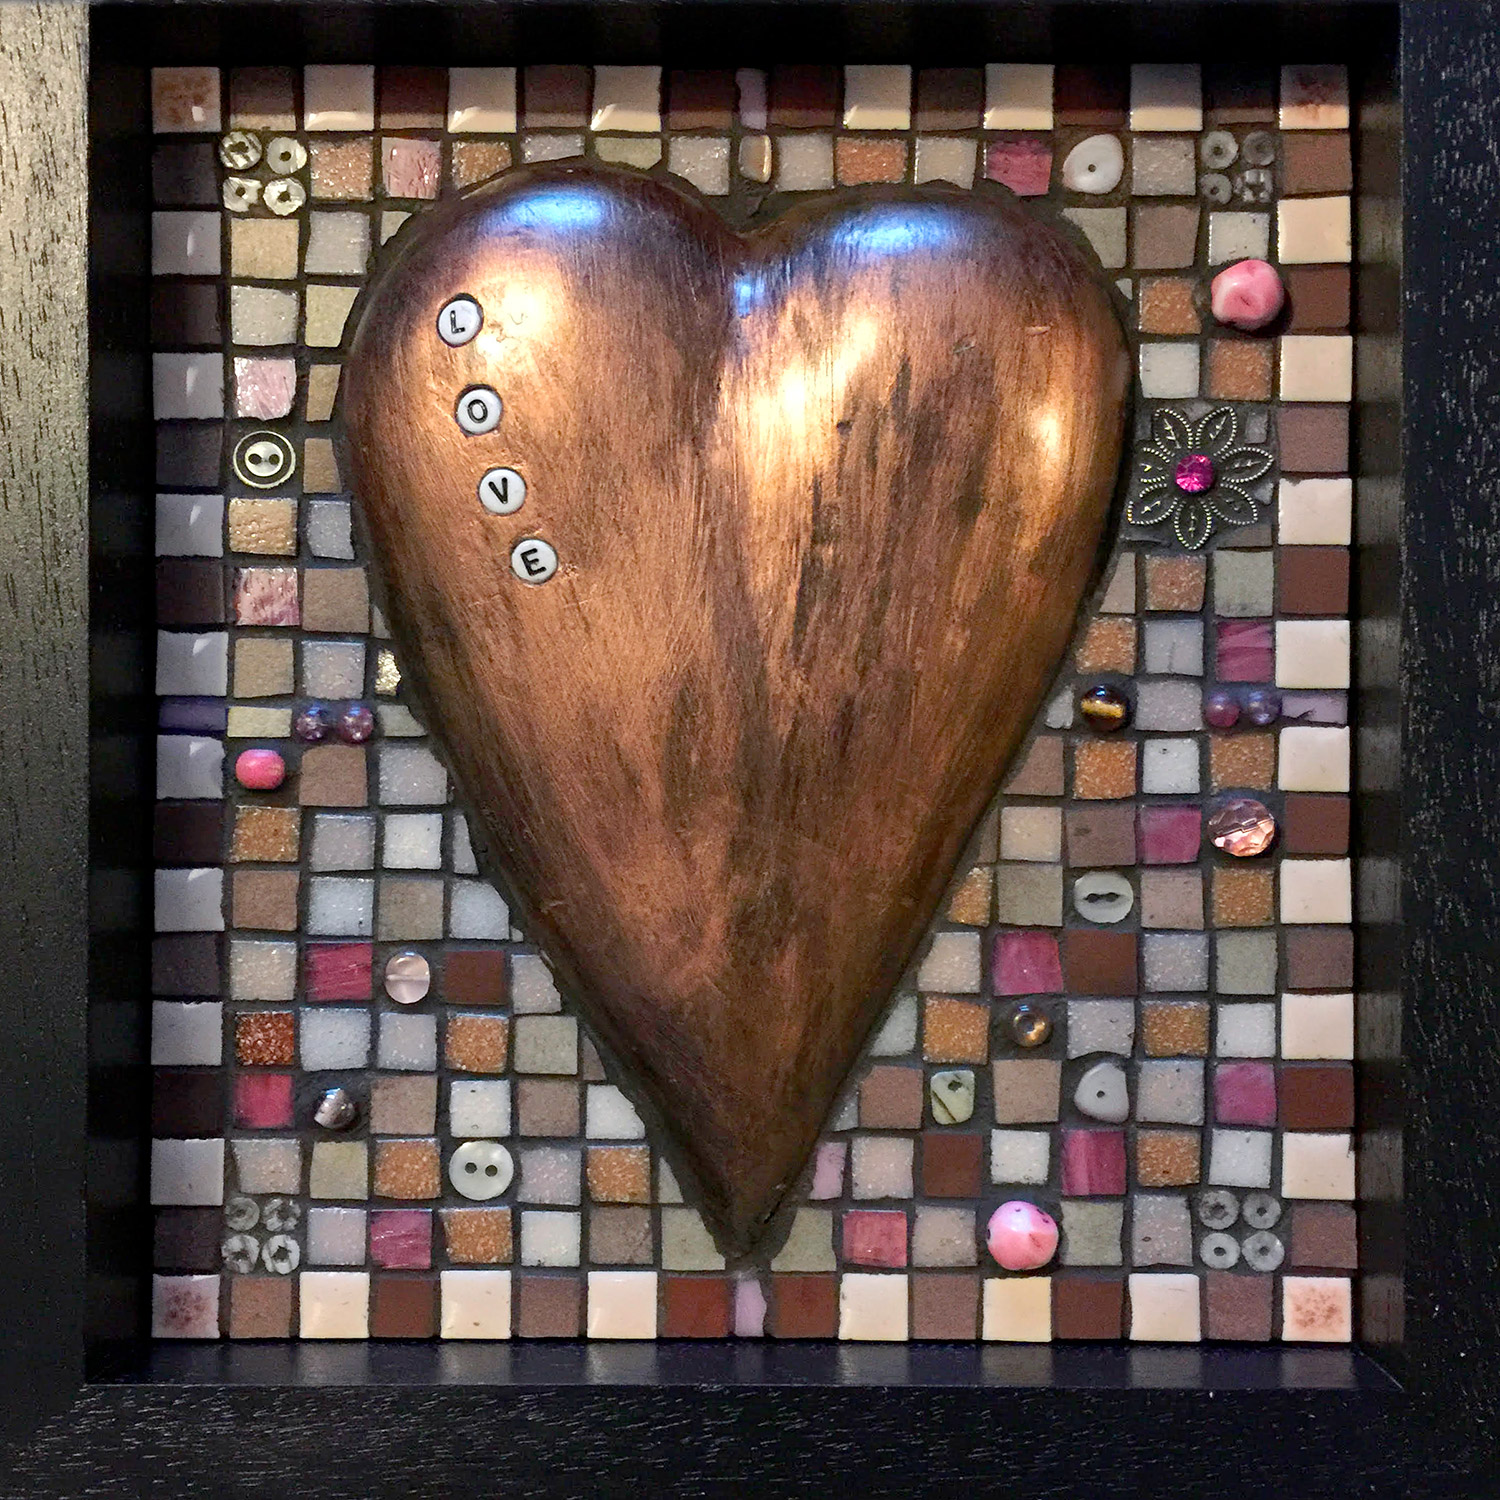 mosaic-love-heart-artwork-by-david-nicholls-portland-dorset.jpg